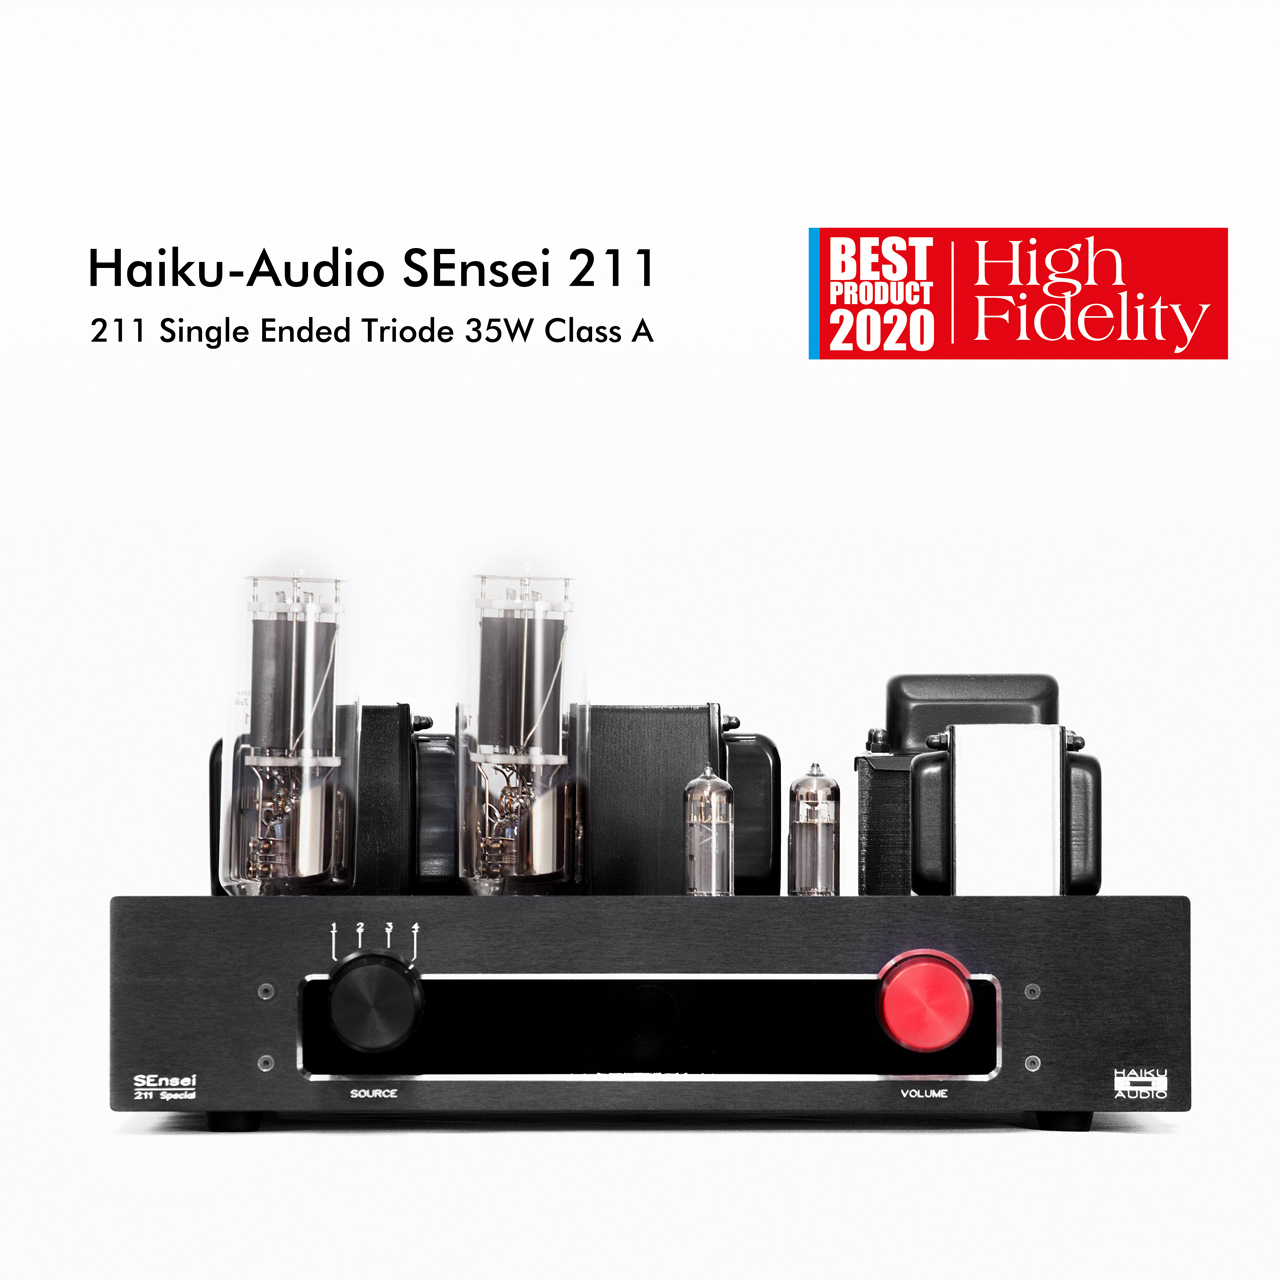 Haiku-Audio SEnsei 211 Special Edition